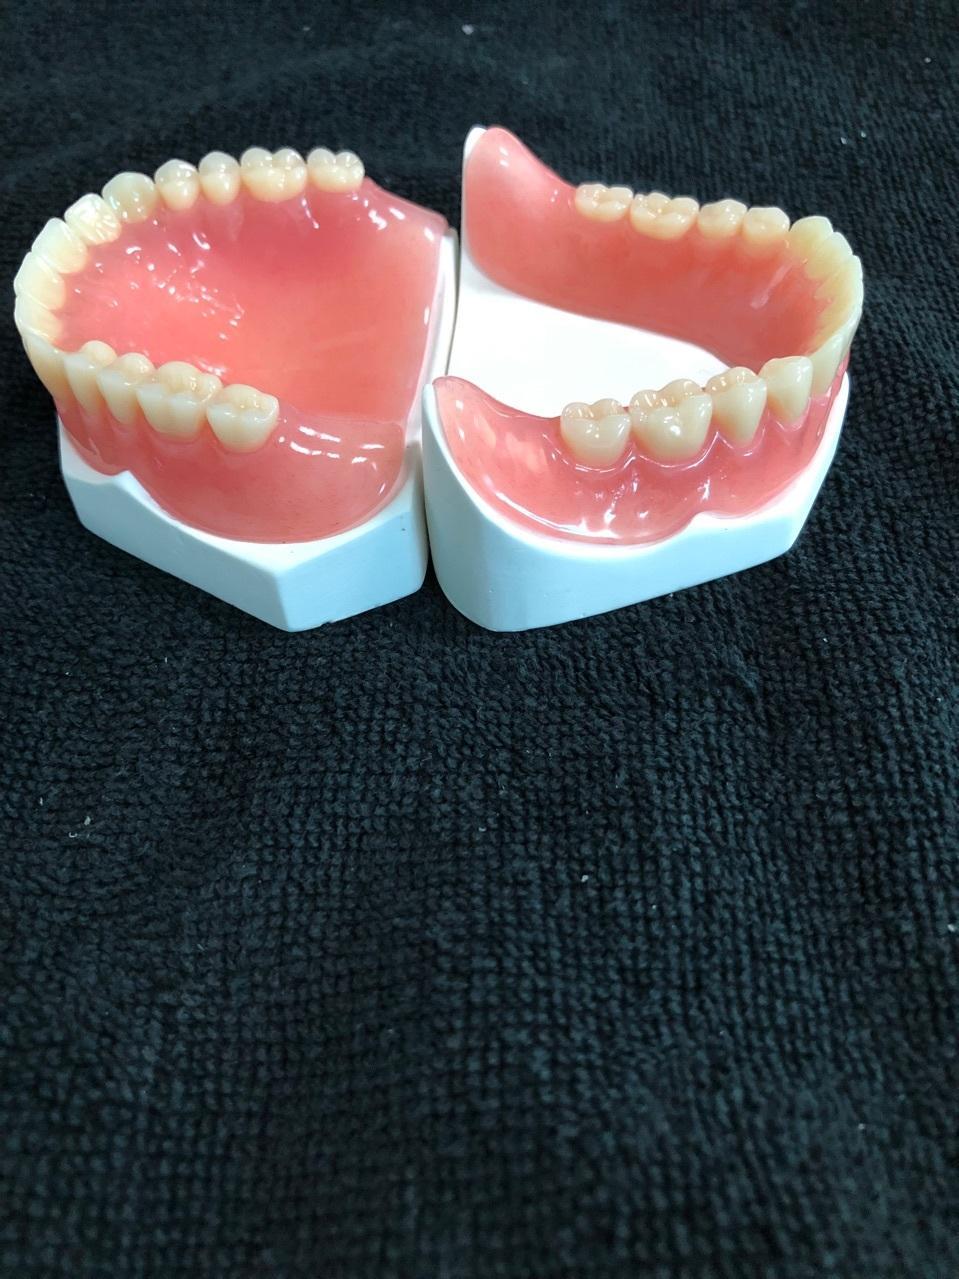 Lower dentures